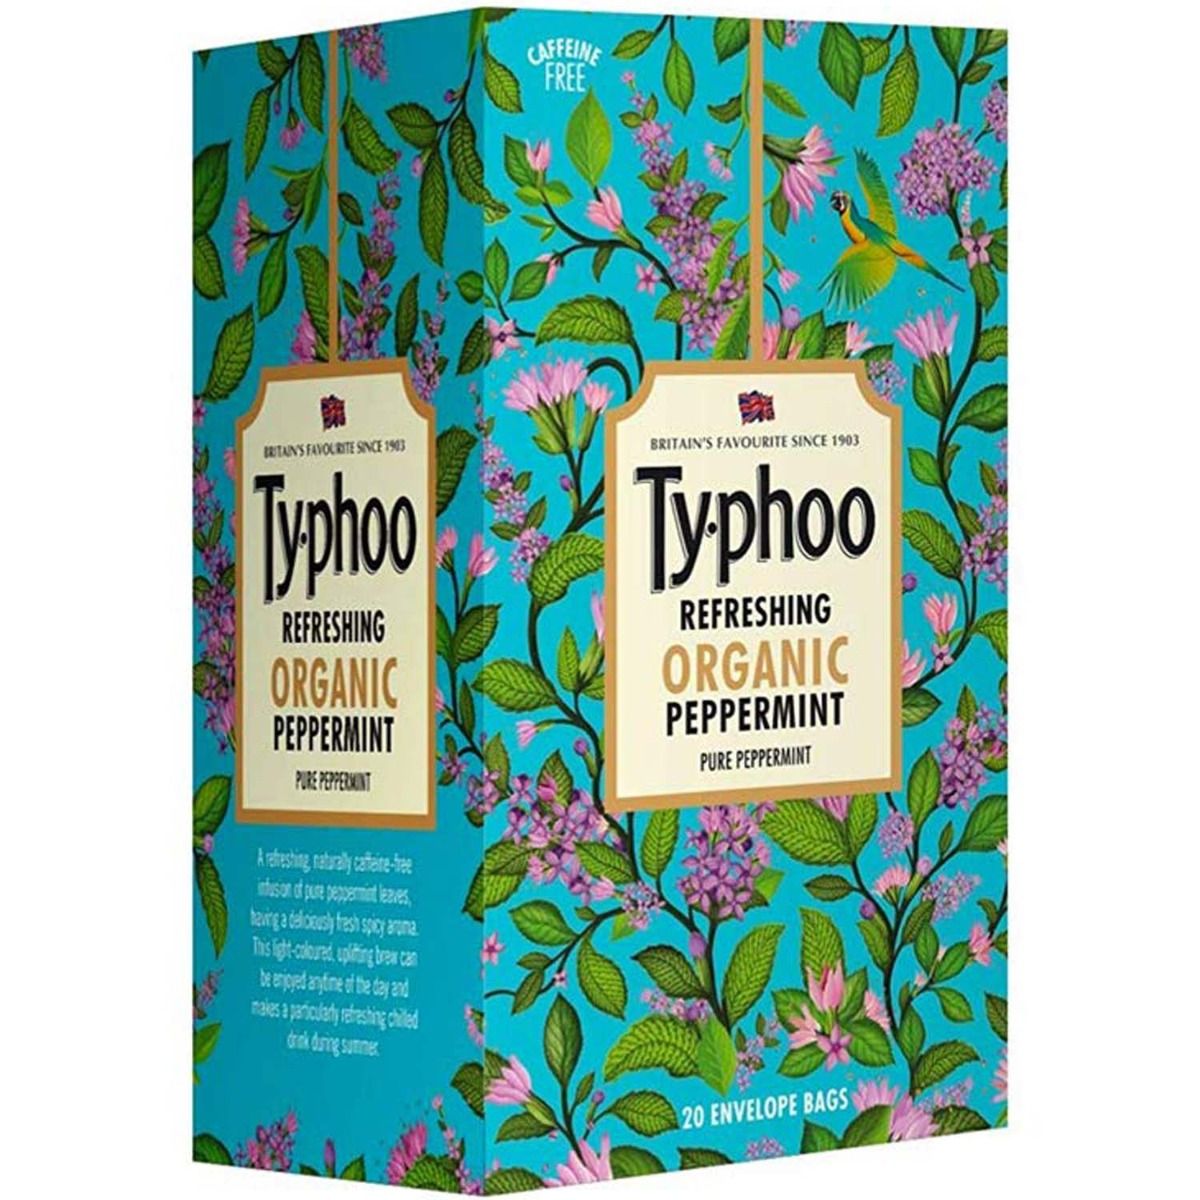 Ty.Phoo Refreshing Organic Peppermint Tea Bags, 20 Count, Pack of 1 